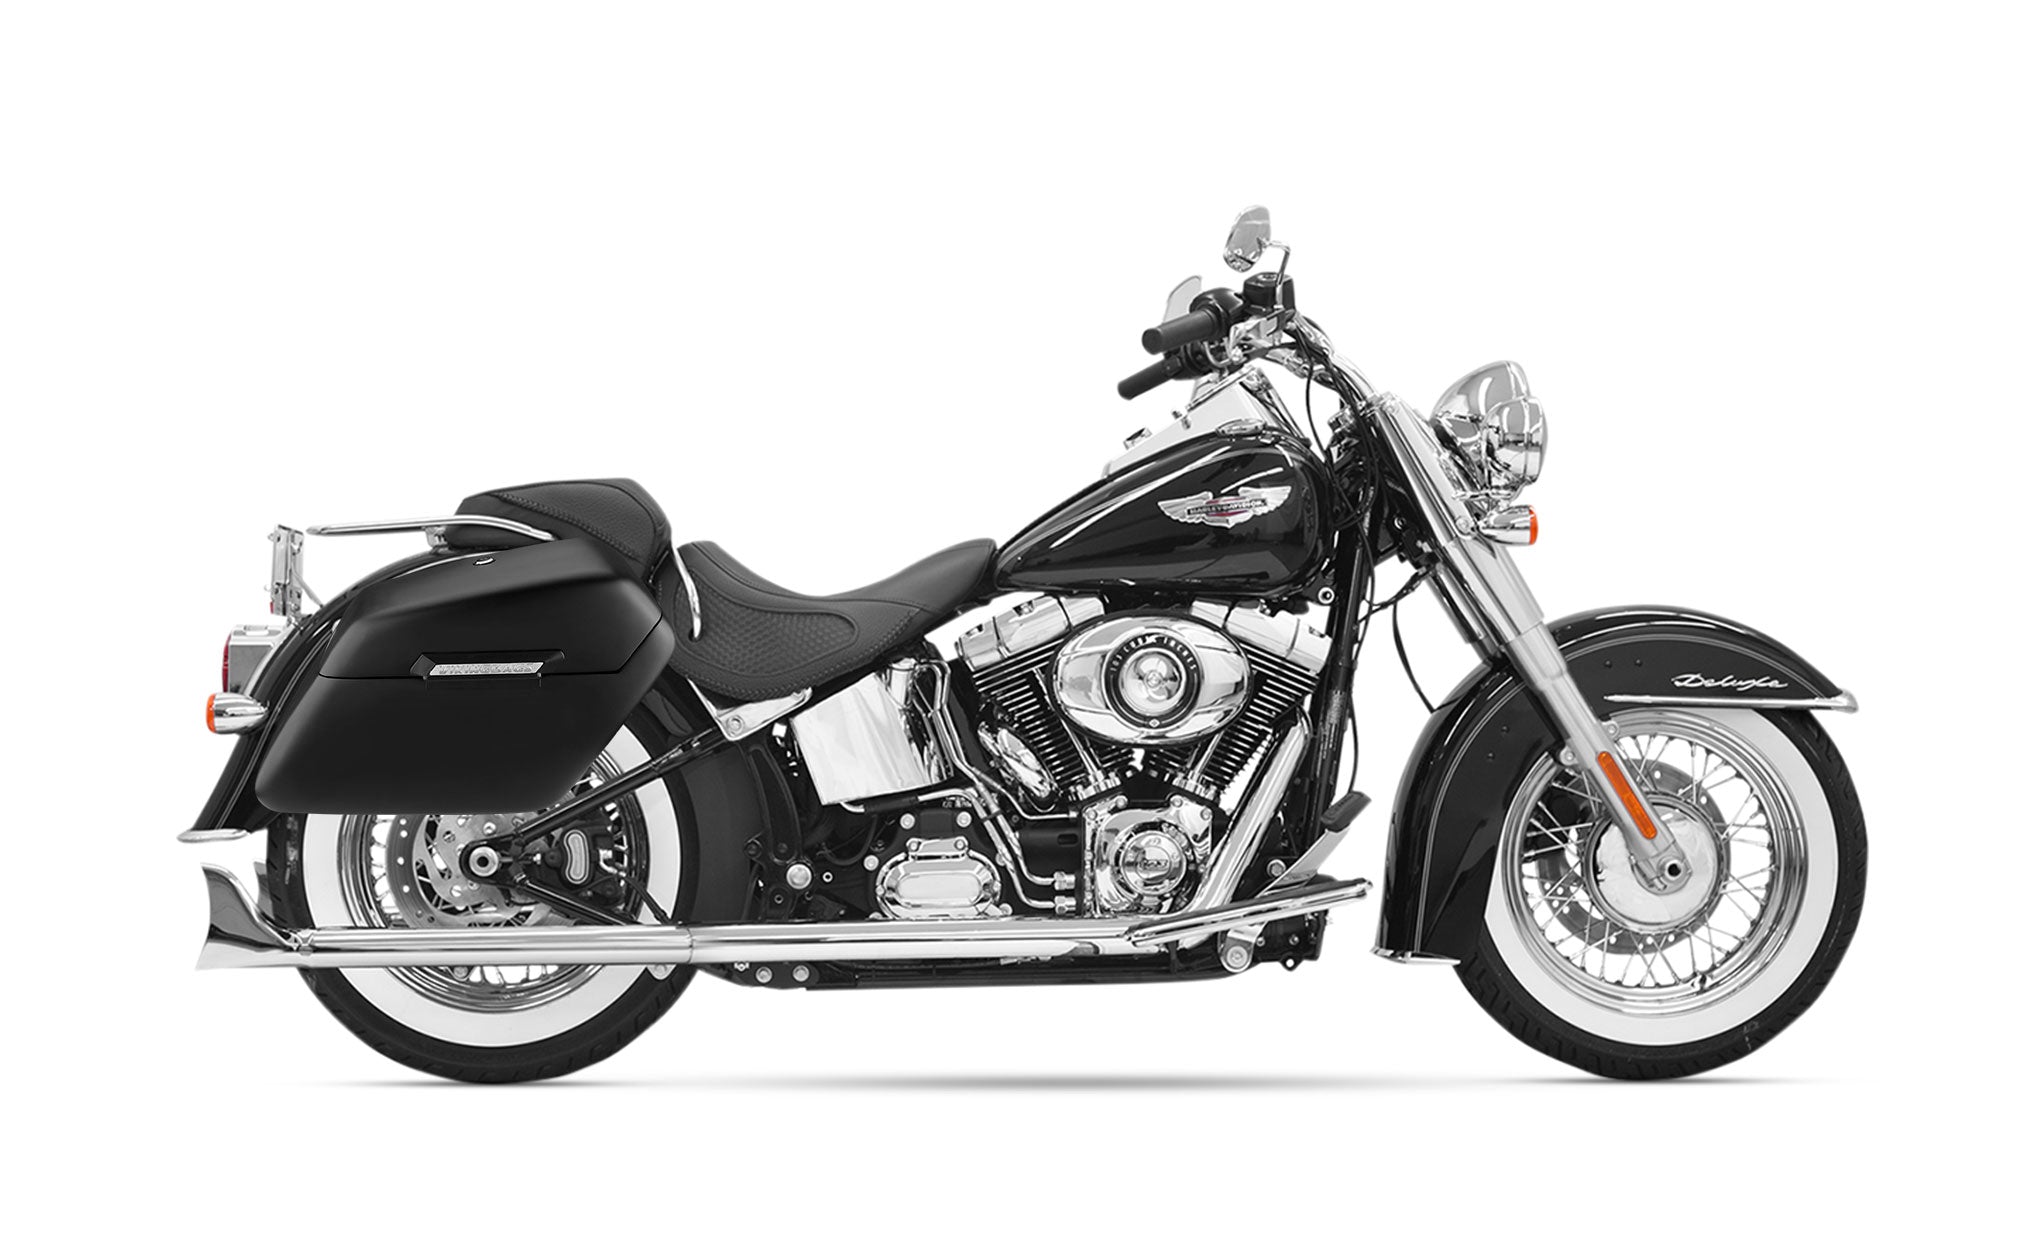 42L - Baldur Extra Large Matte Motorcycle Hard Saddlebags for Harley Softail Heritage FLSTICCI on Bike Photo @expand